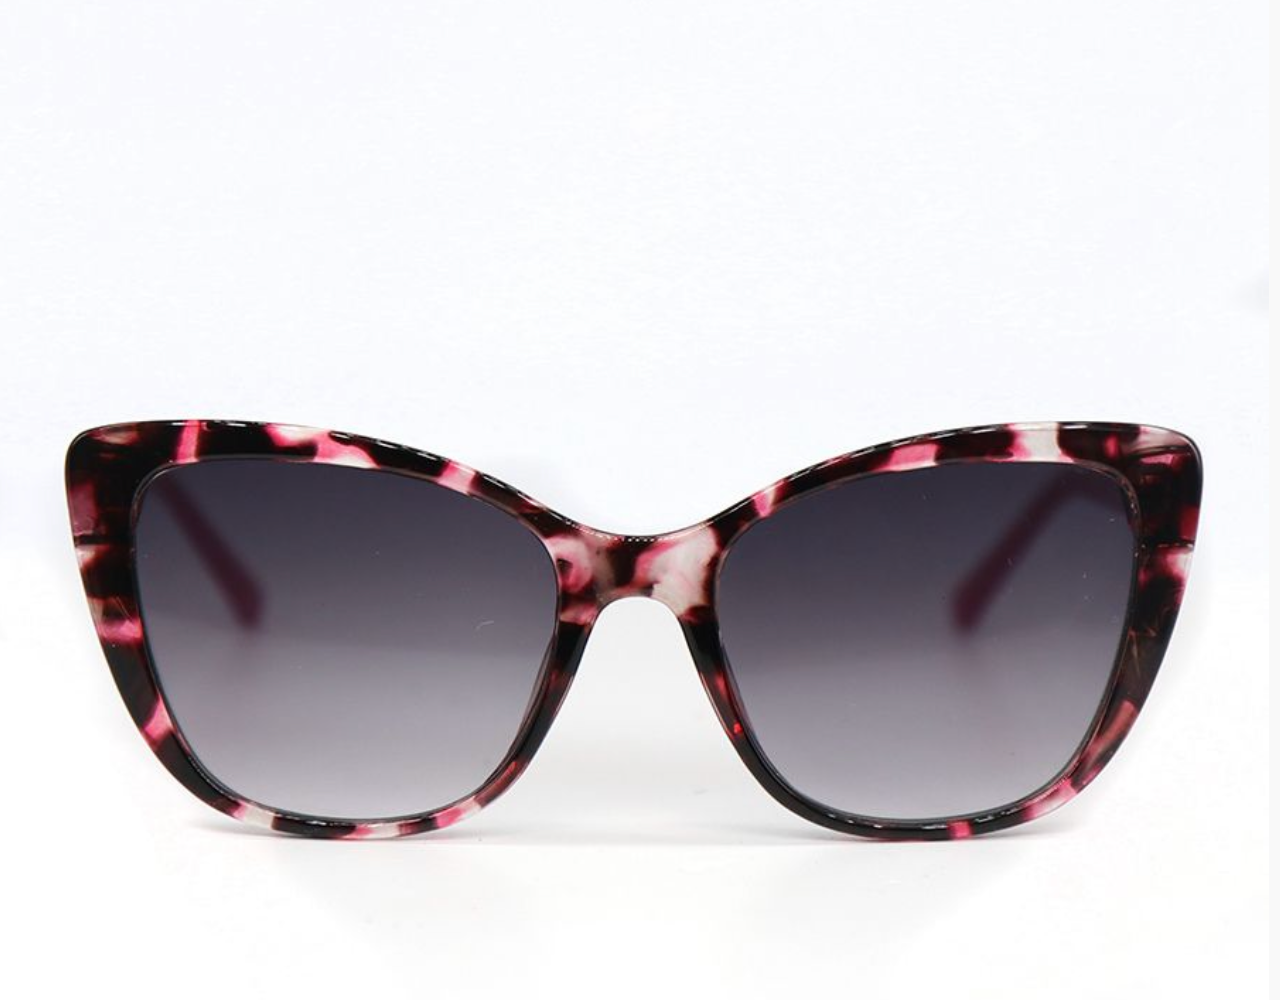 Recycled pink tortoiseshell frame sunglasses